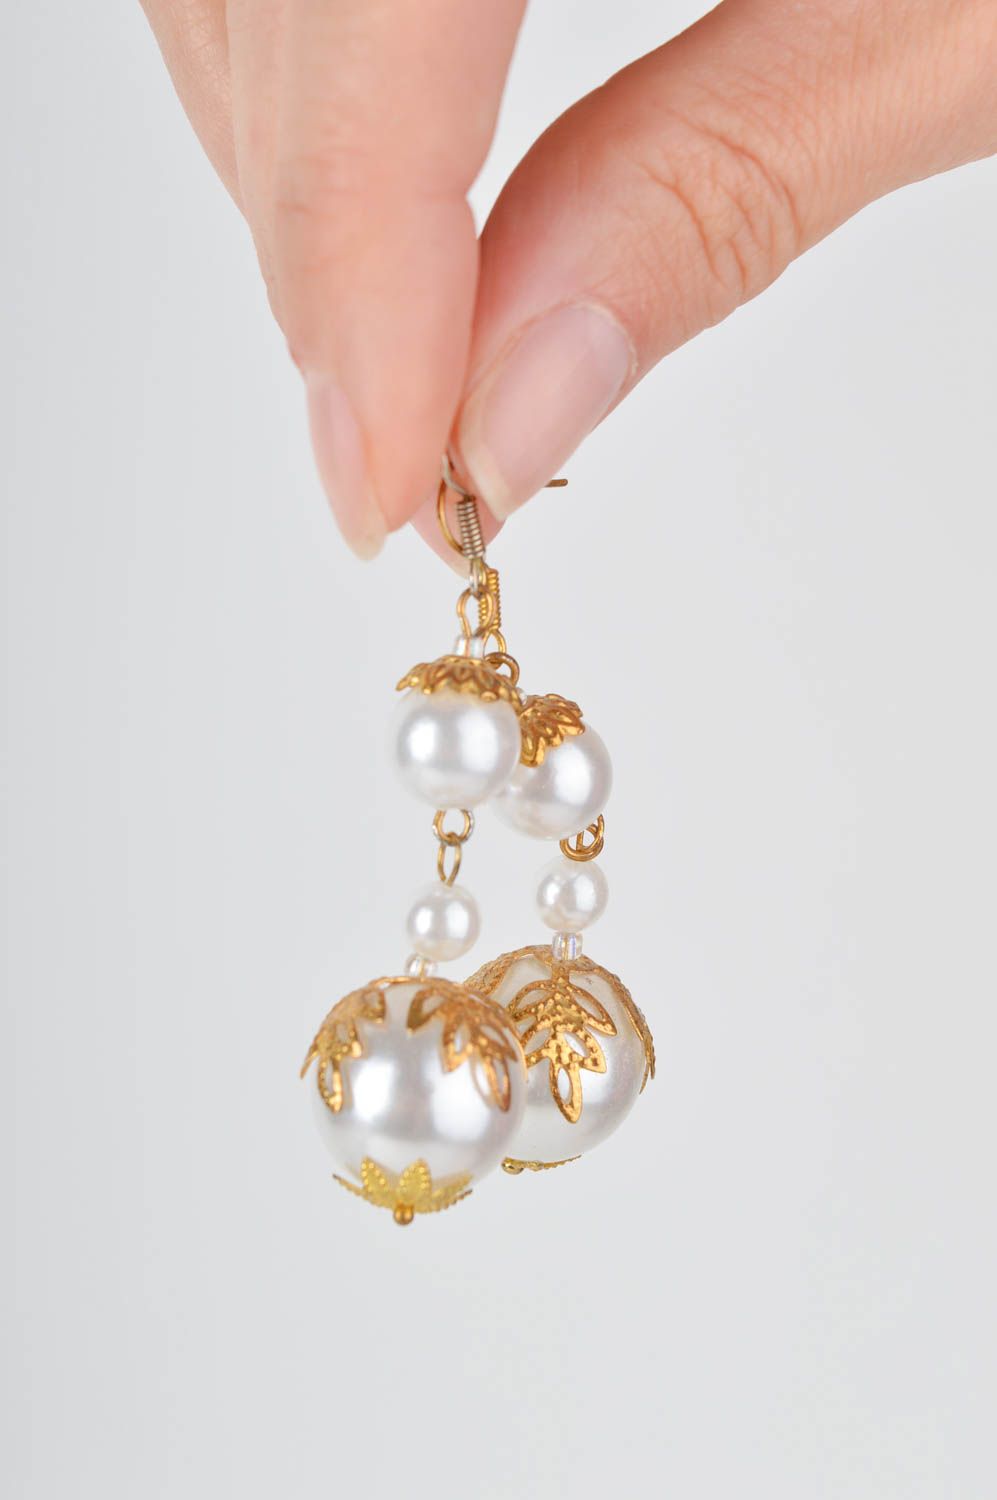 Handmade earrings designer jewelry dangling earrings fashion accessories photo 2